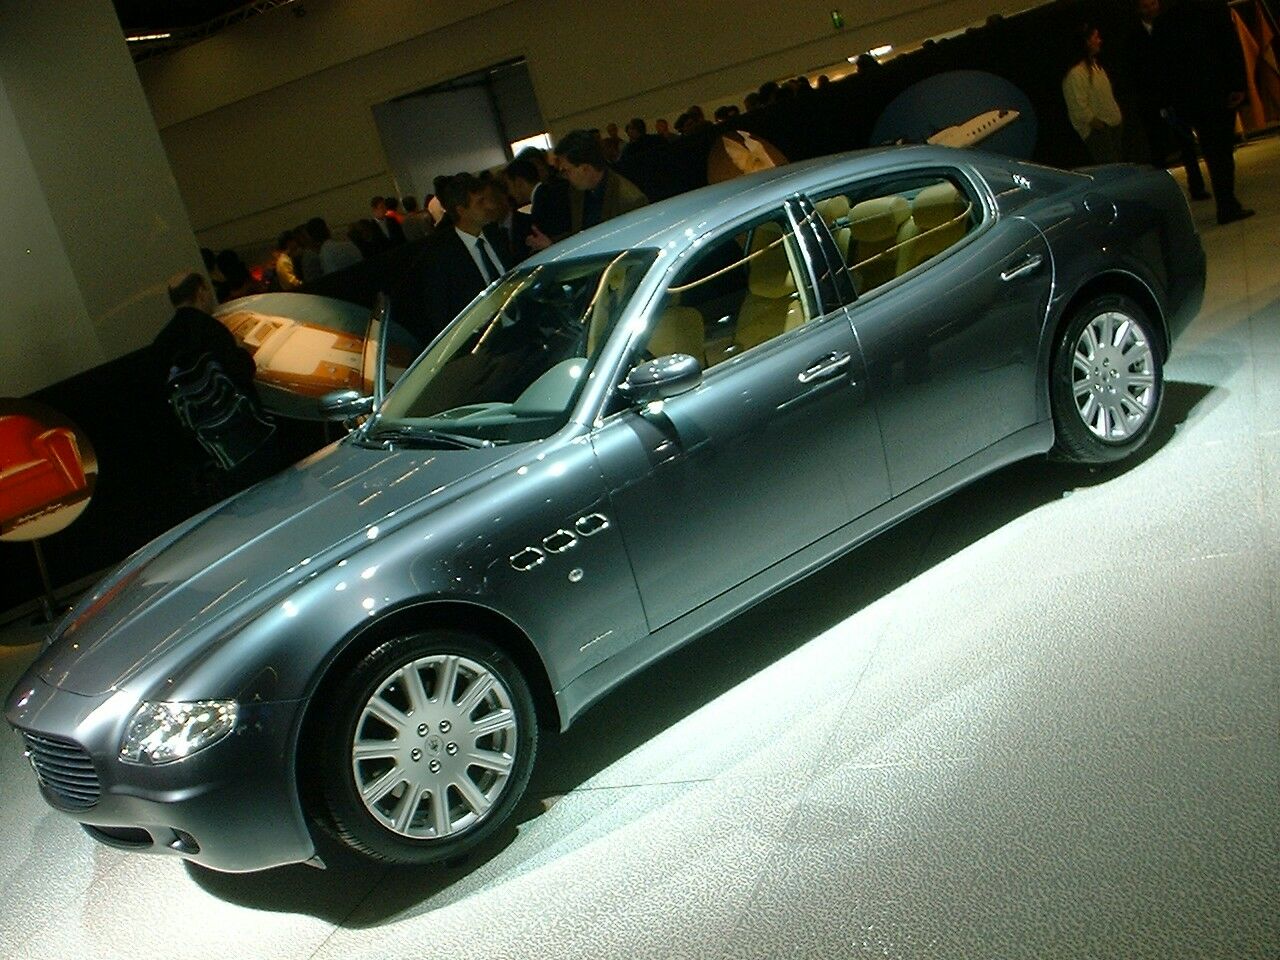 World Premiere of the Maserati Quattroporte at the 2003 Frankfurt Motor Show